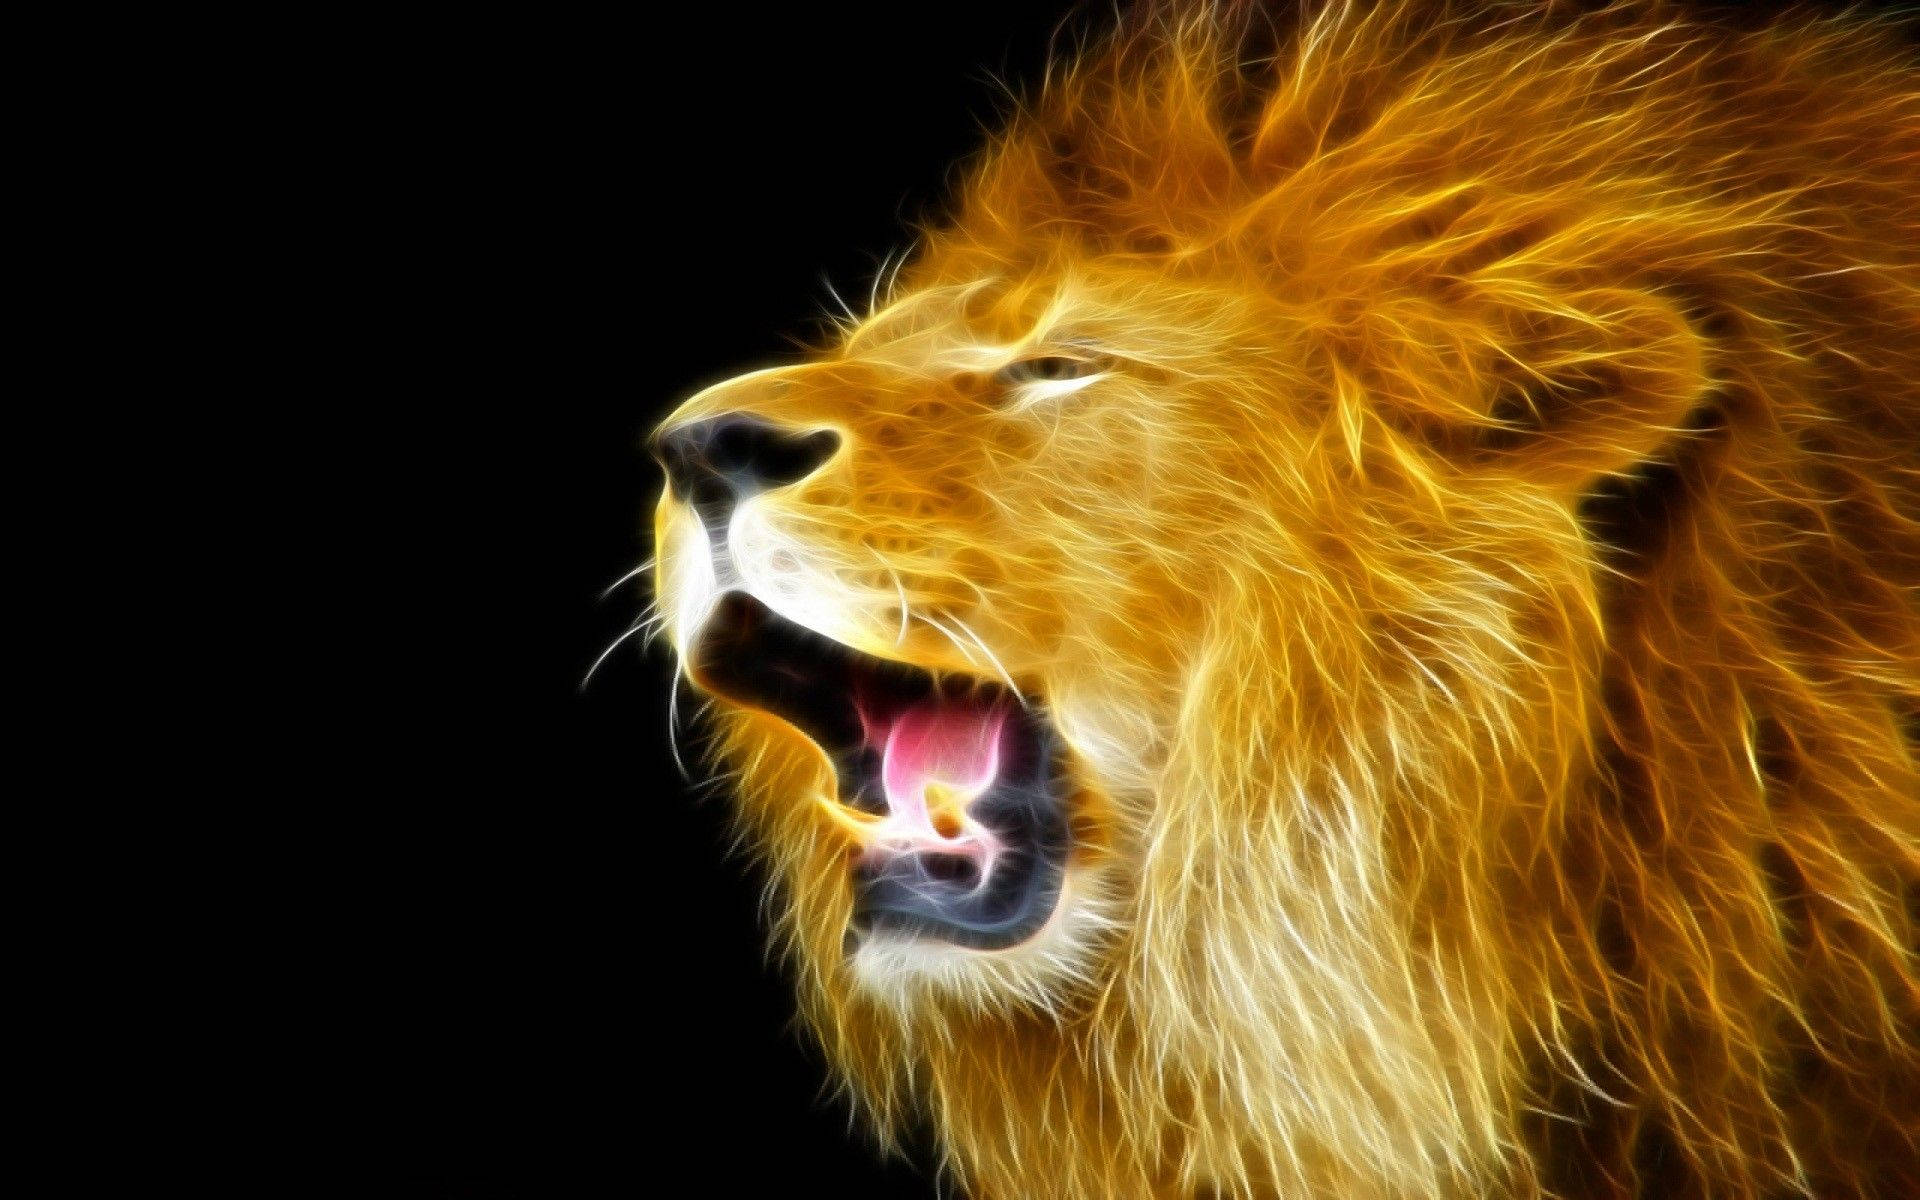 3d Lion Display Features Roaring Lion Wallpaper